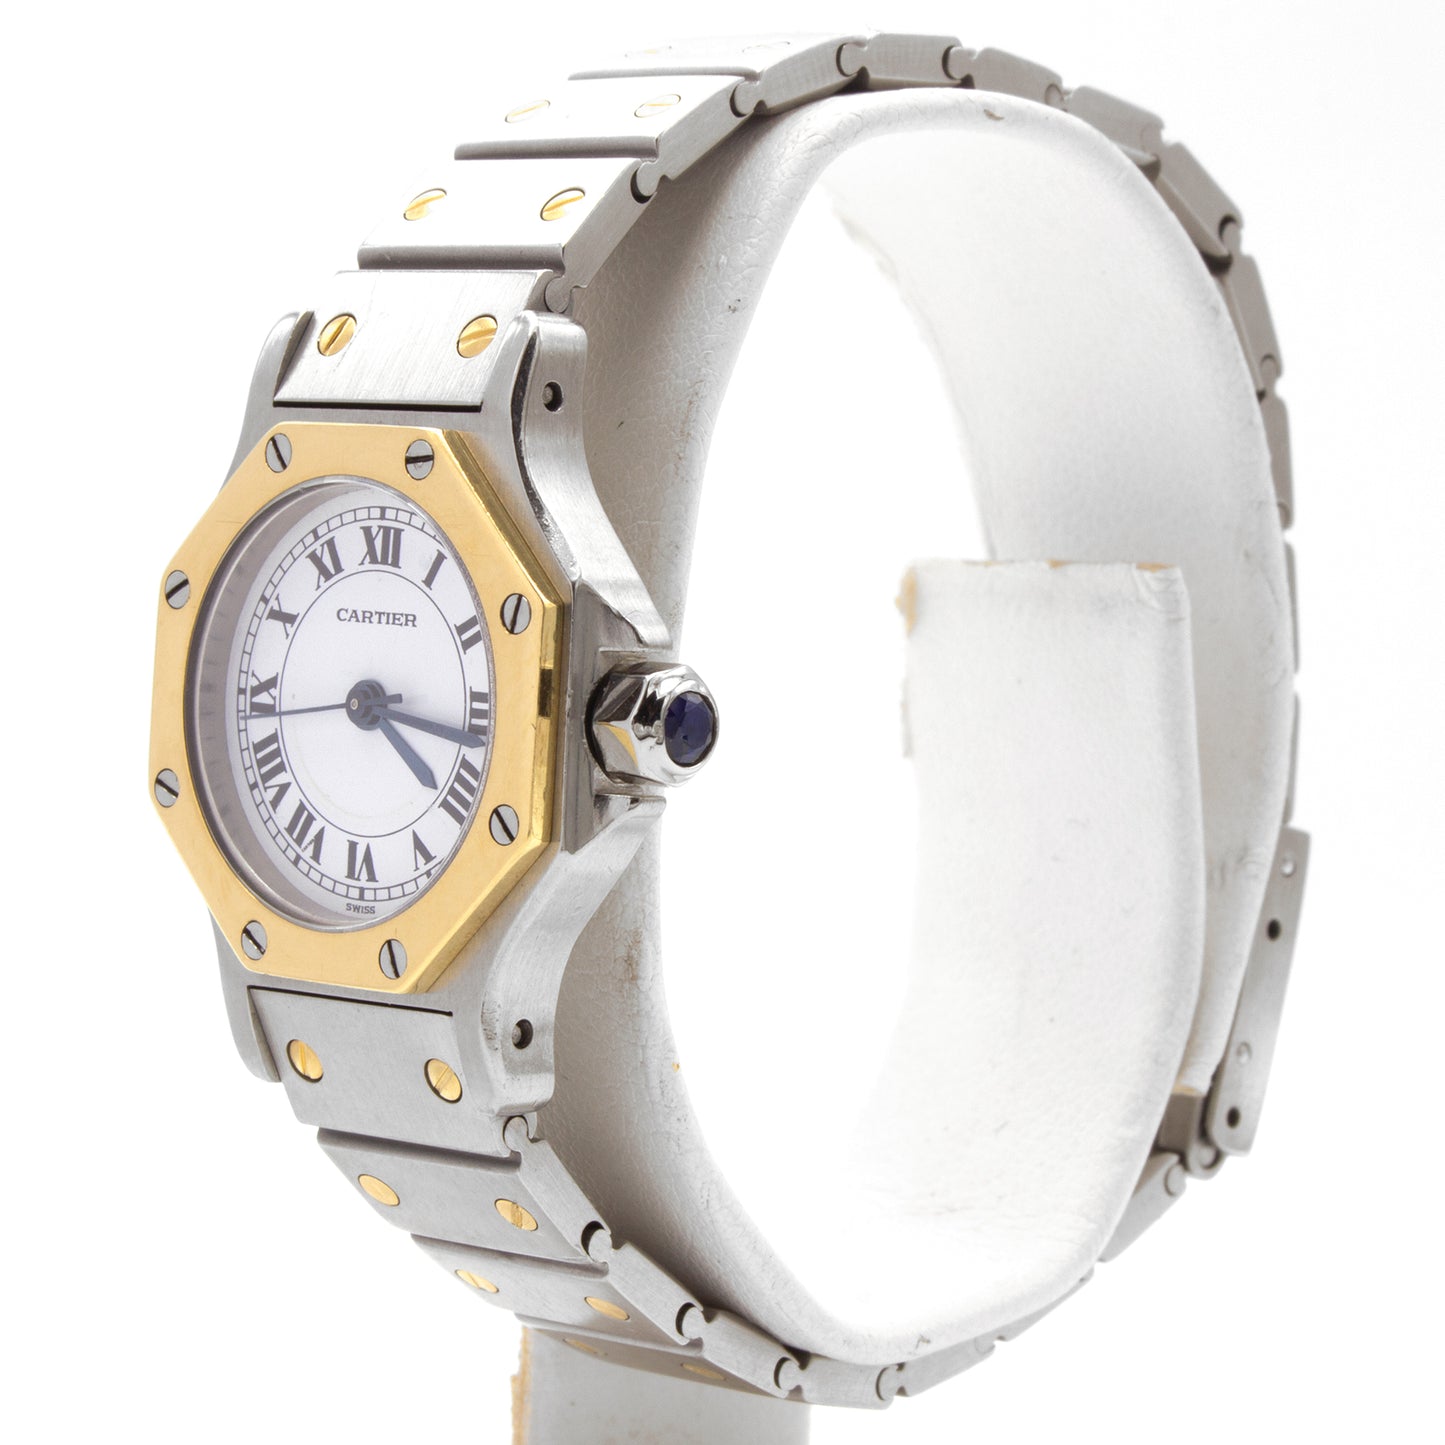 Cartier Santos automatic watch